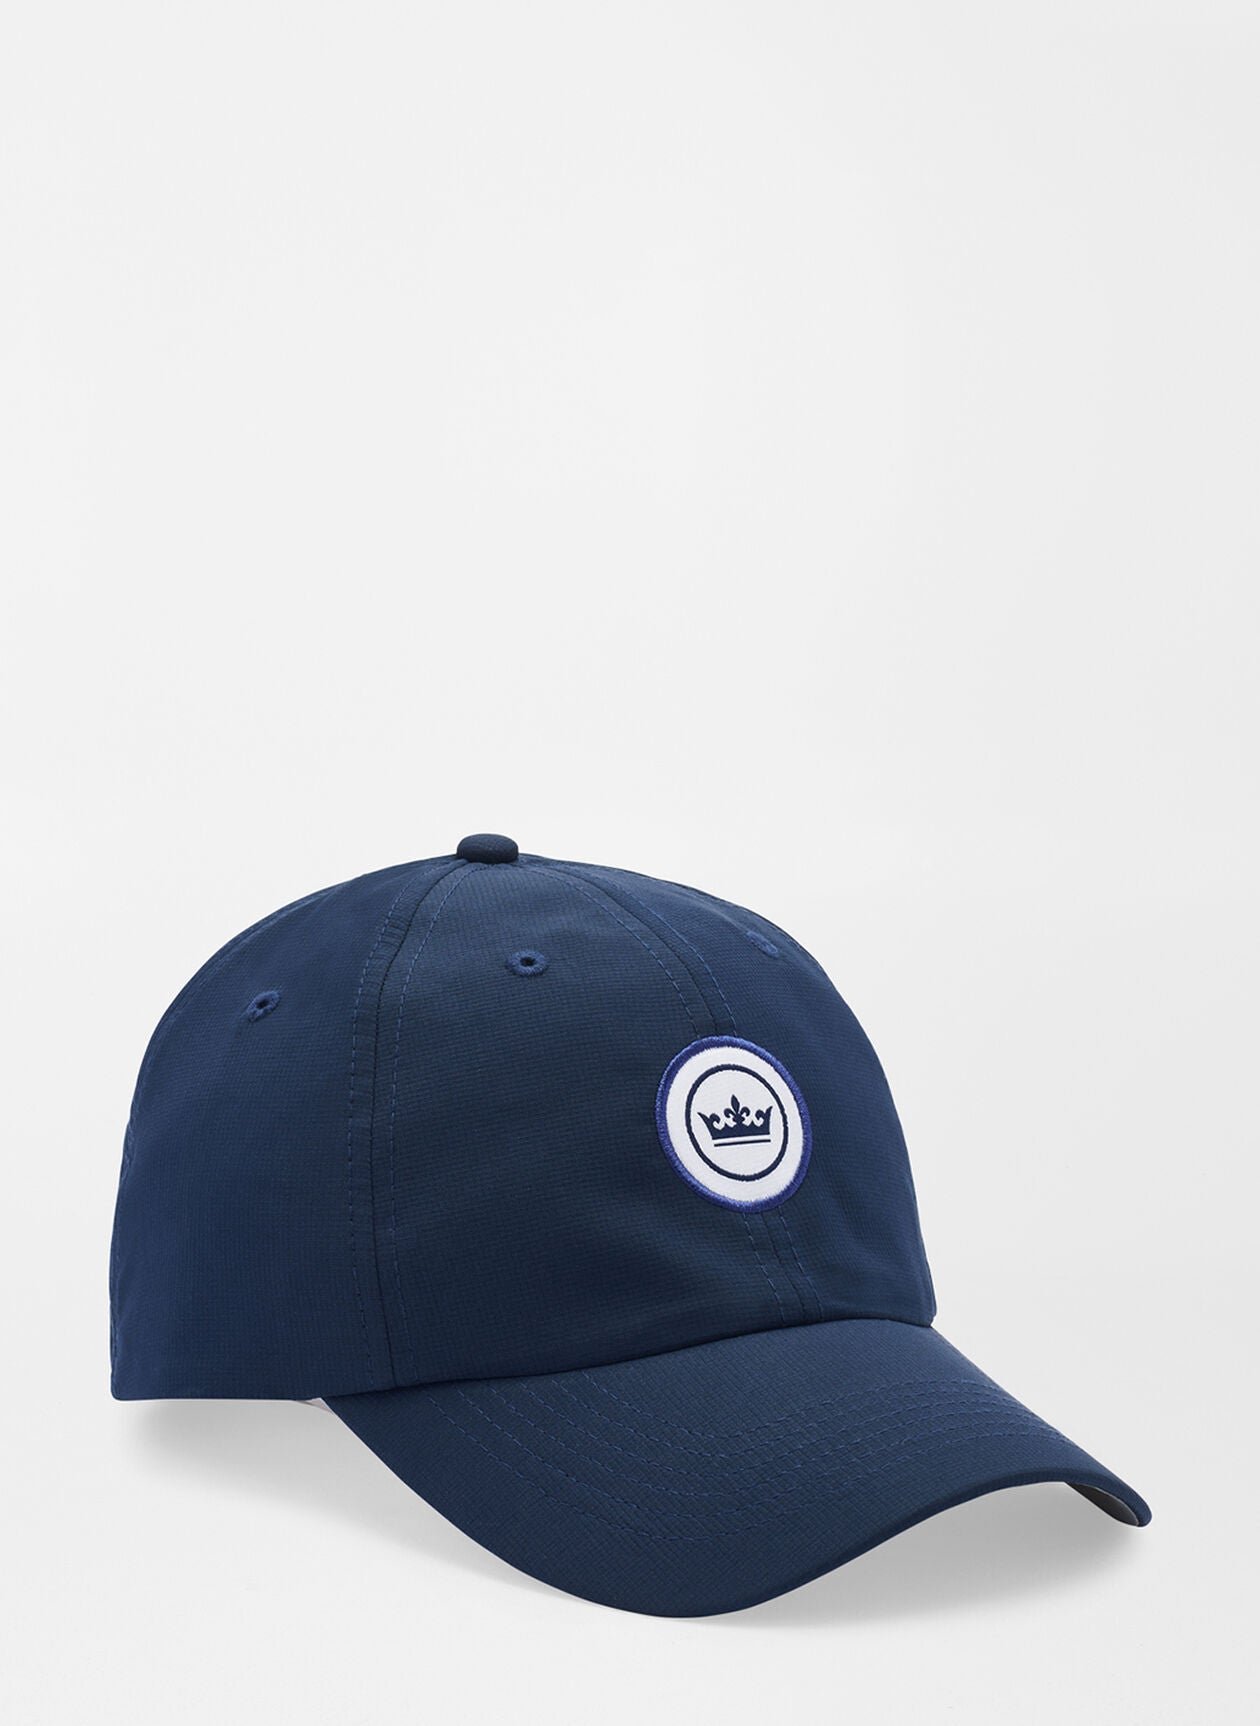 Crown Seal Performance Hat - Navy